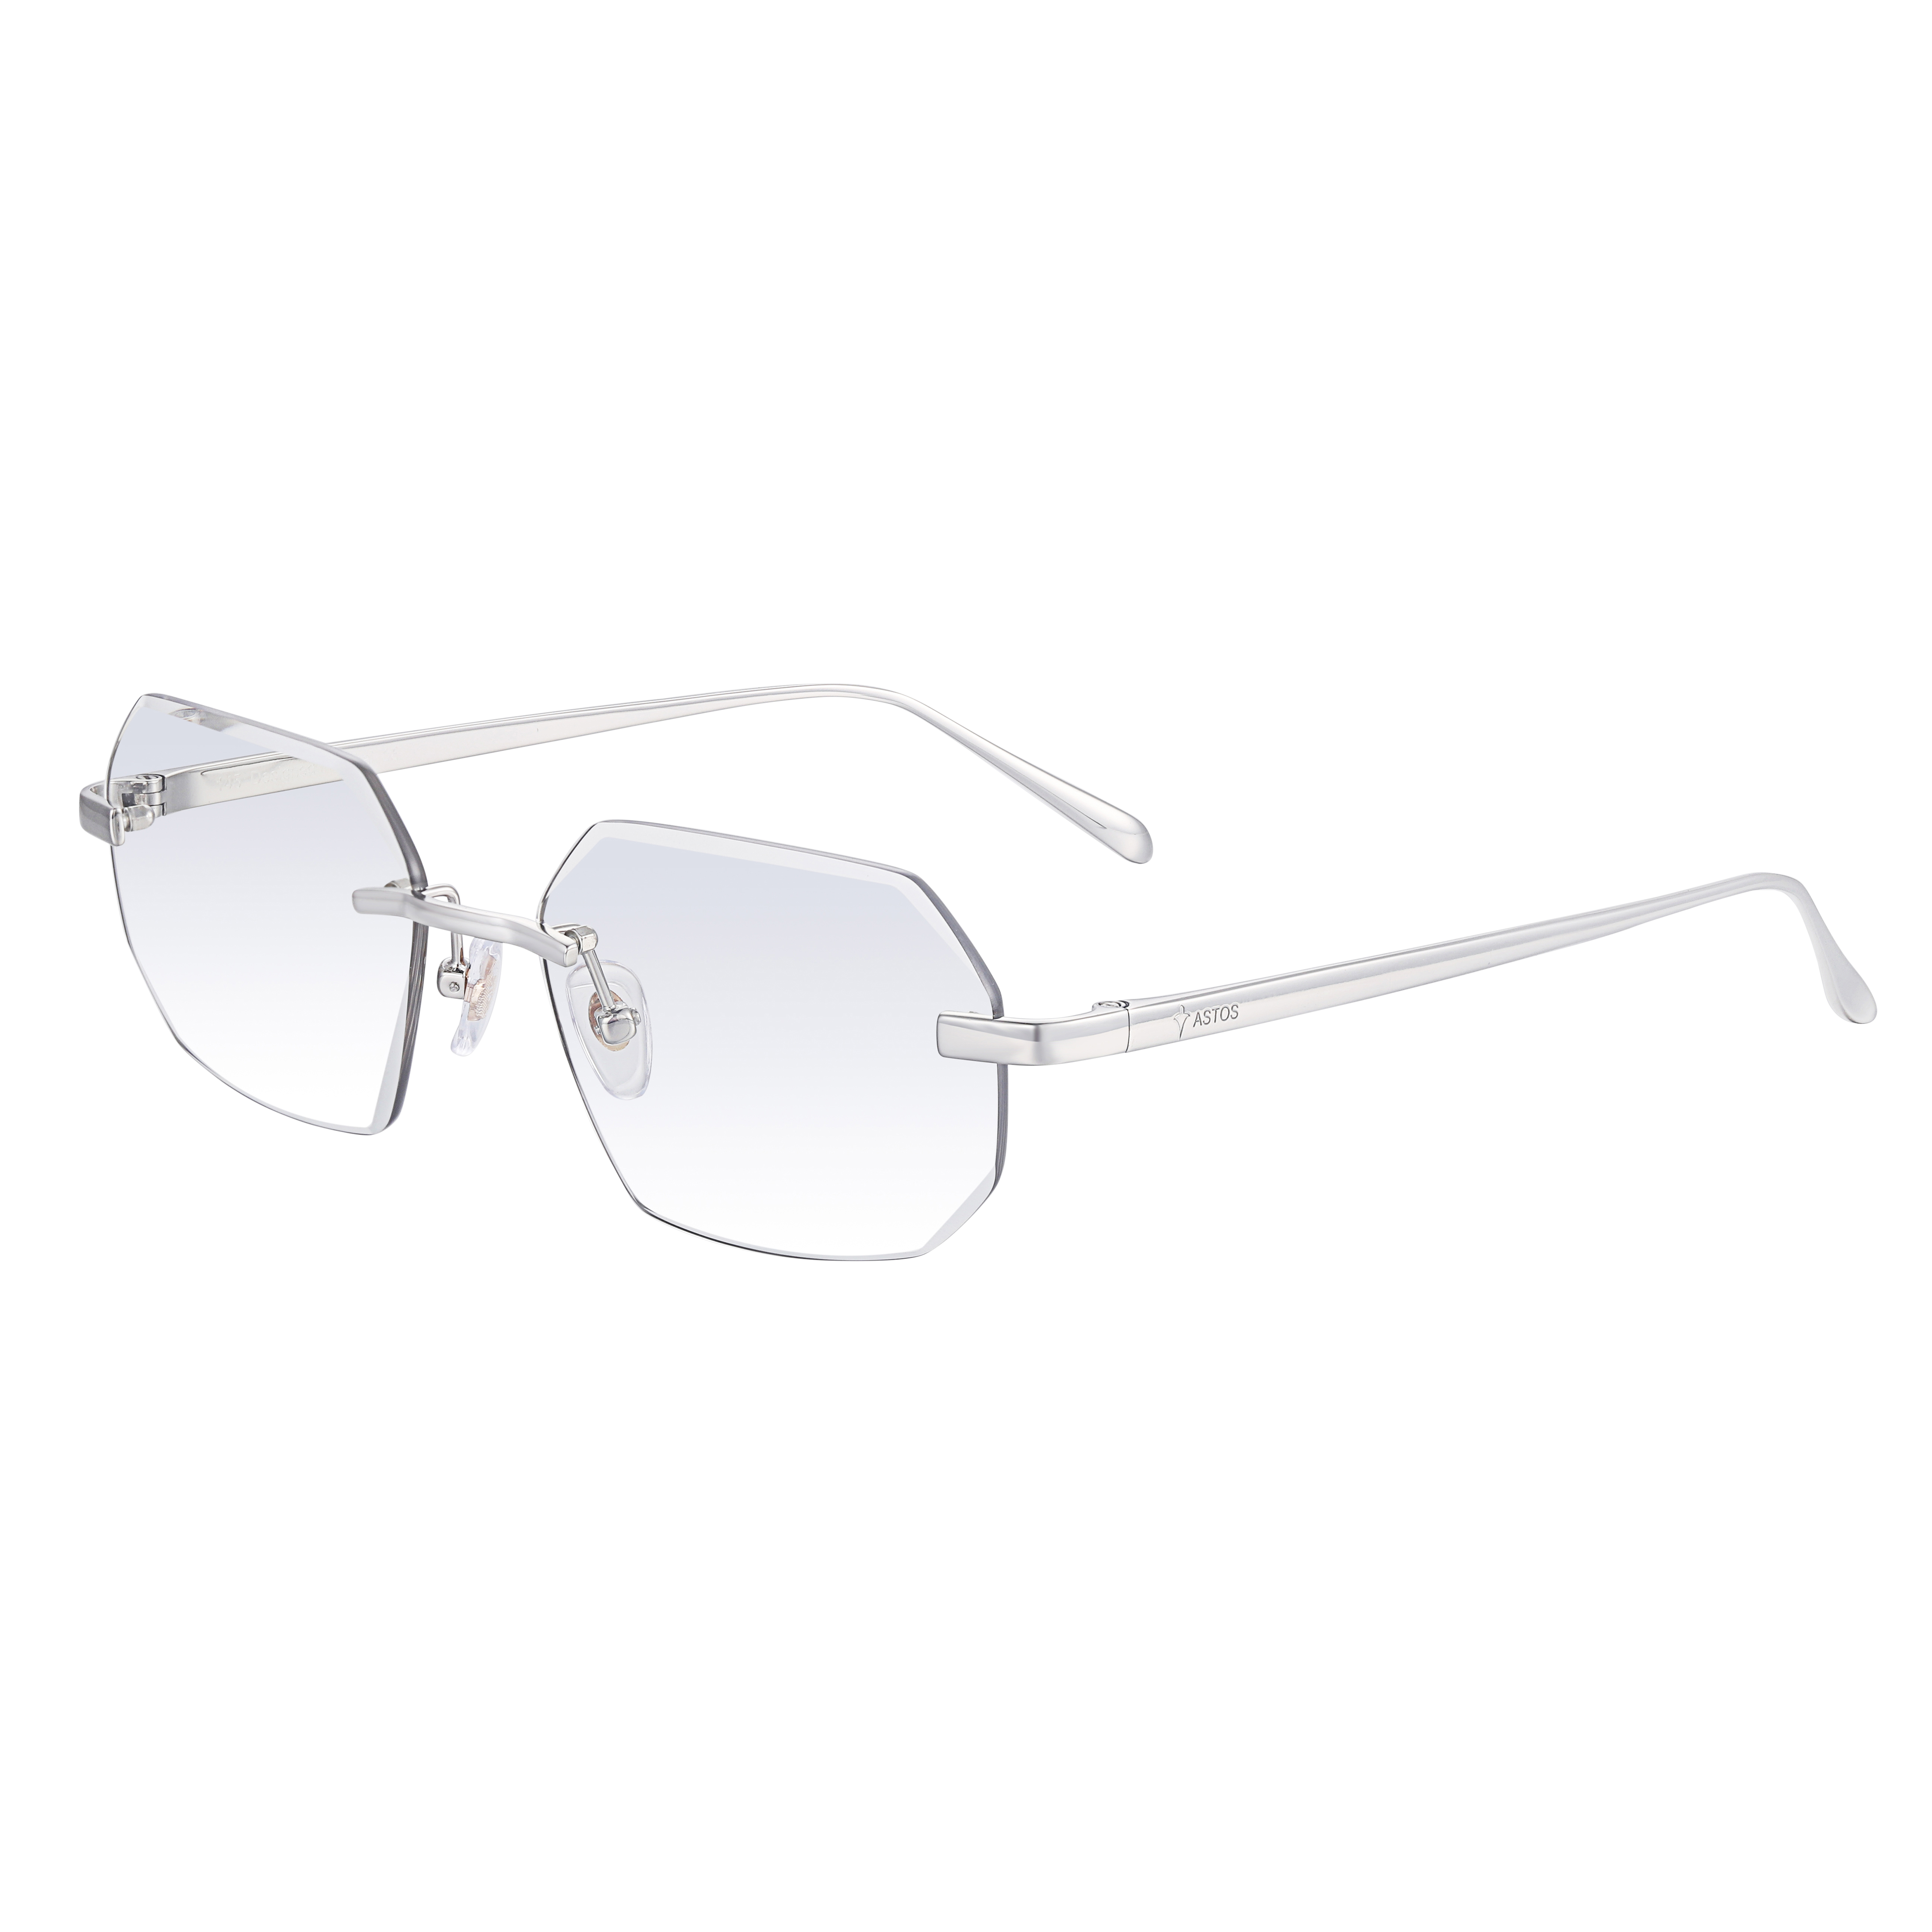 Men's Eyewear Silver Diamond Cut Transparent